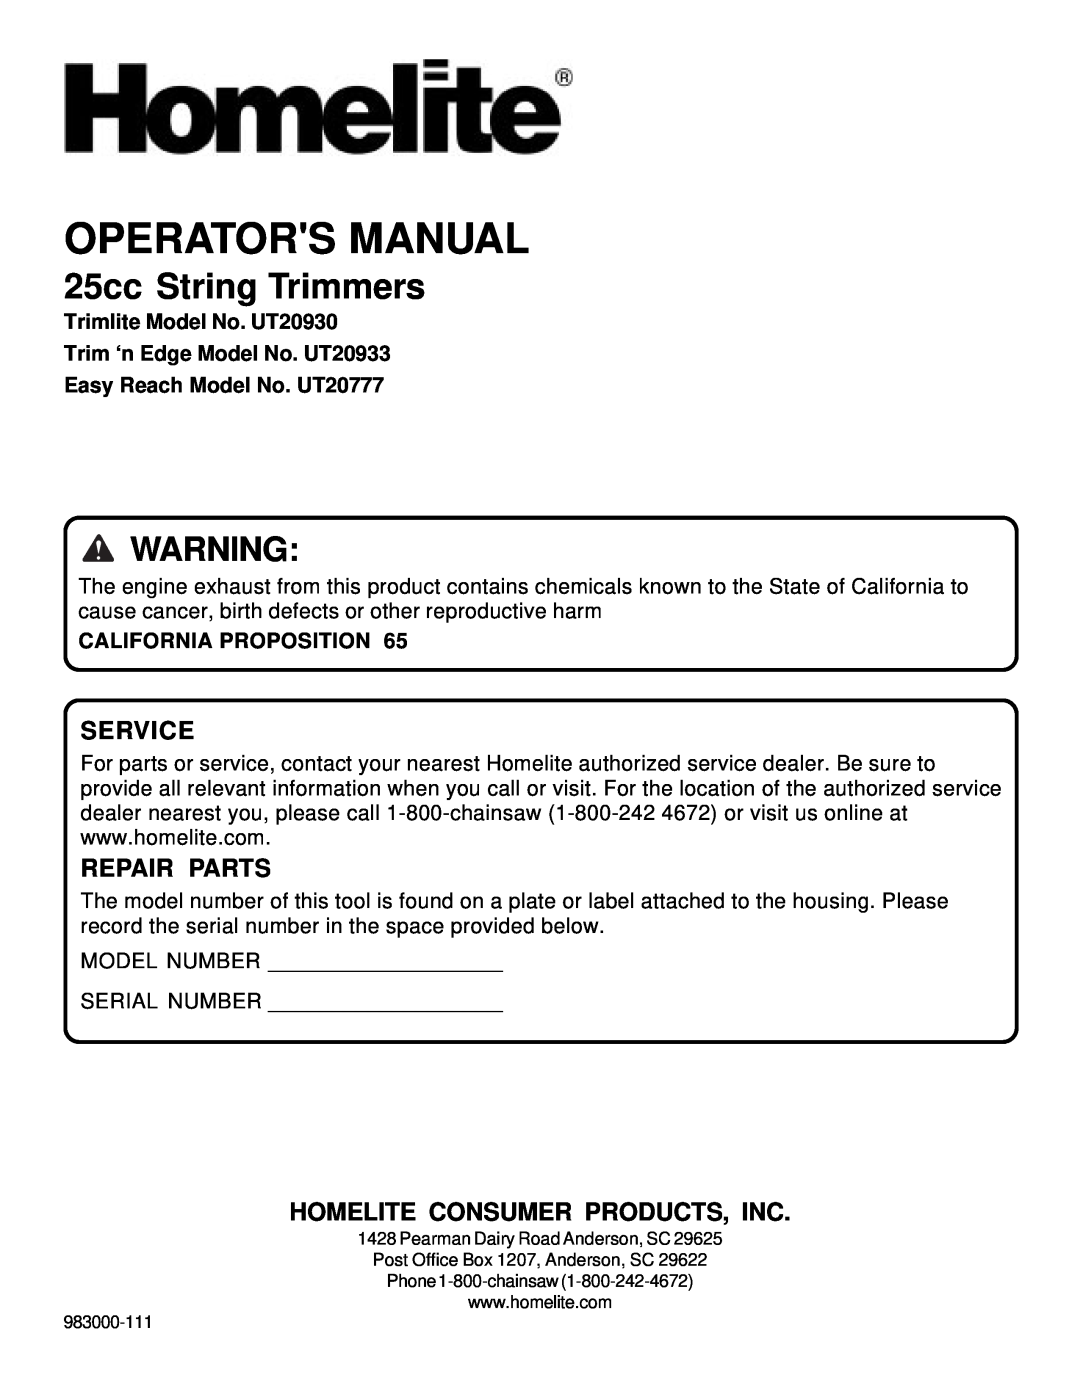 Homelite Service, Repair Parts, Homelite Consumer Products, Inc, Trimlite Model No. UT20930, California Proposition 